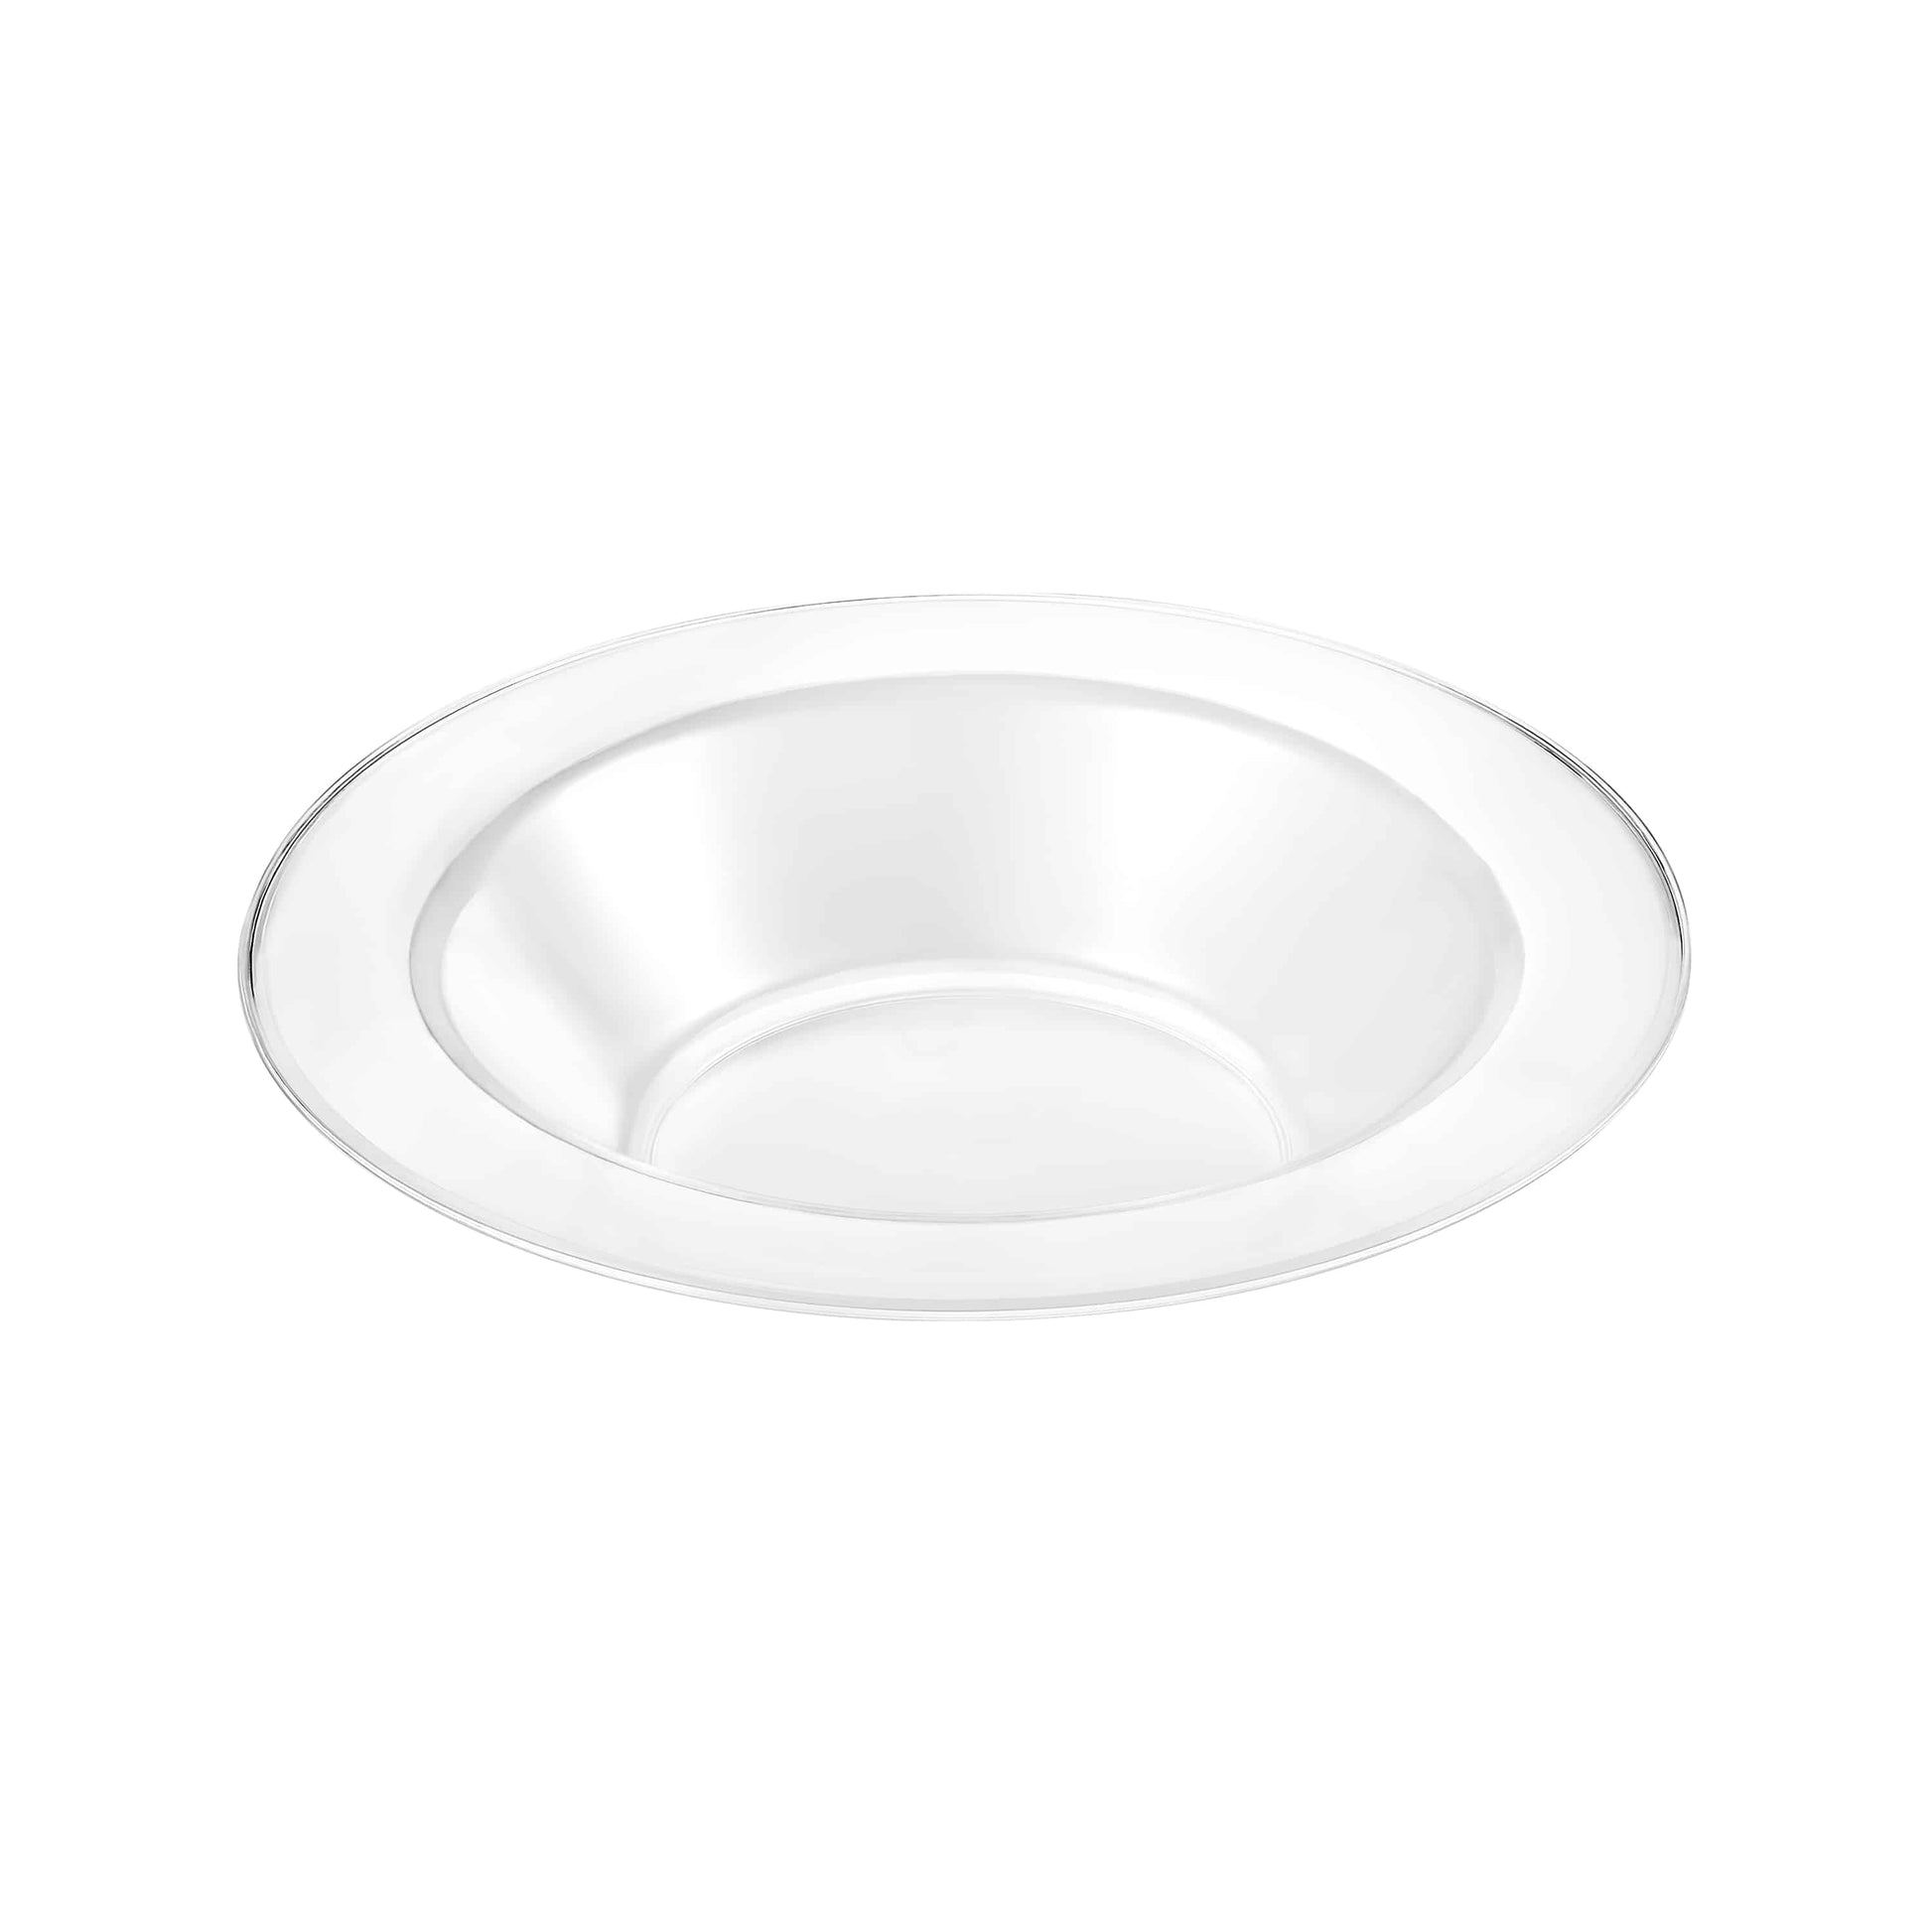 Magnificence Premium Plastic Round Dinnerware - clear bowl